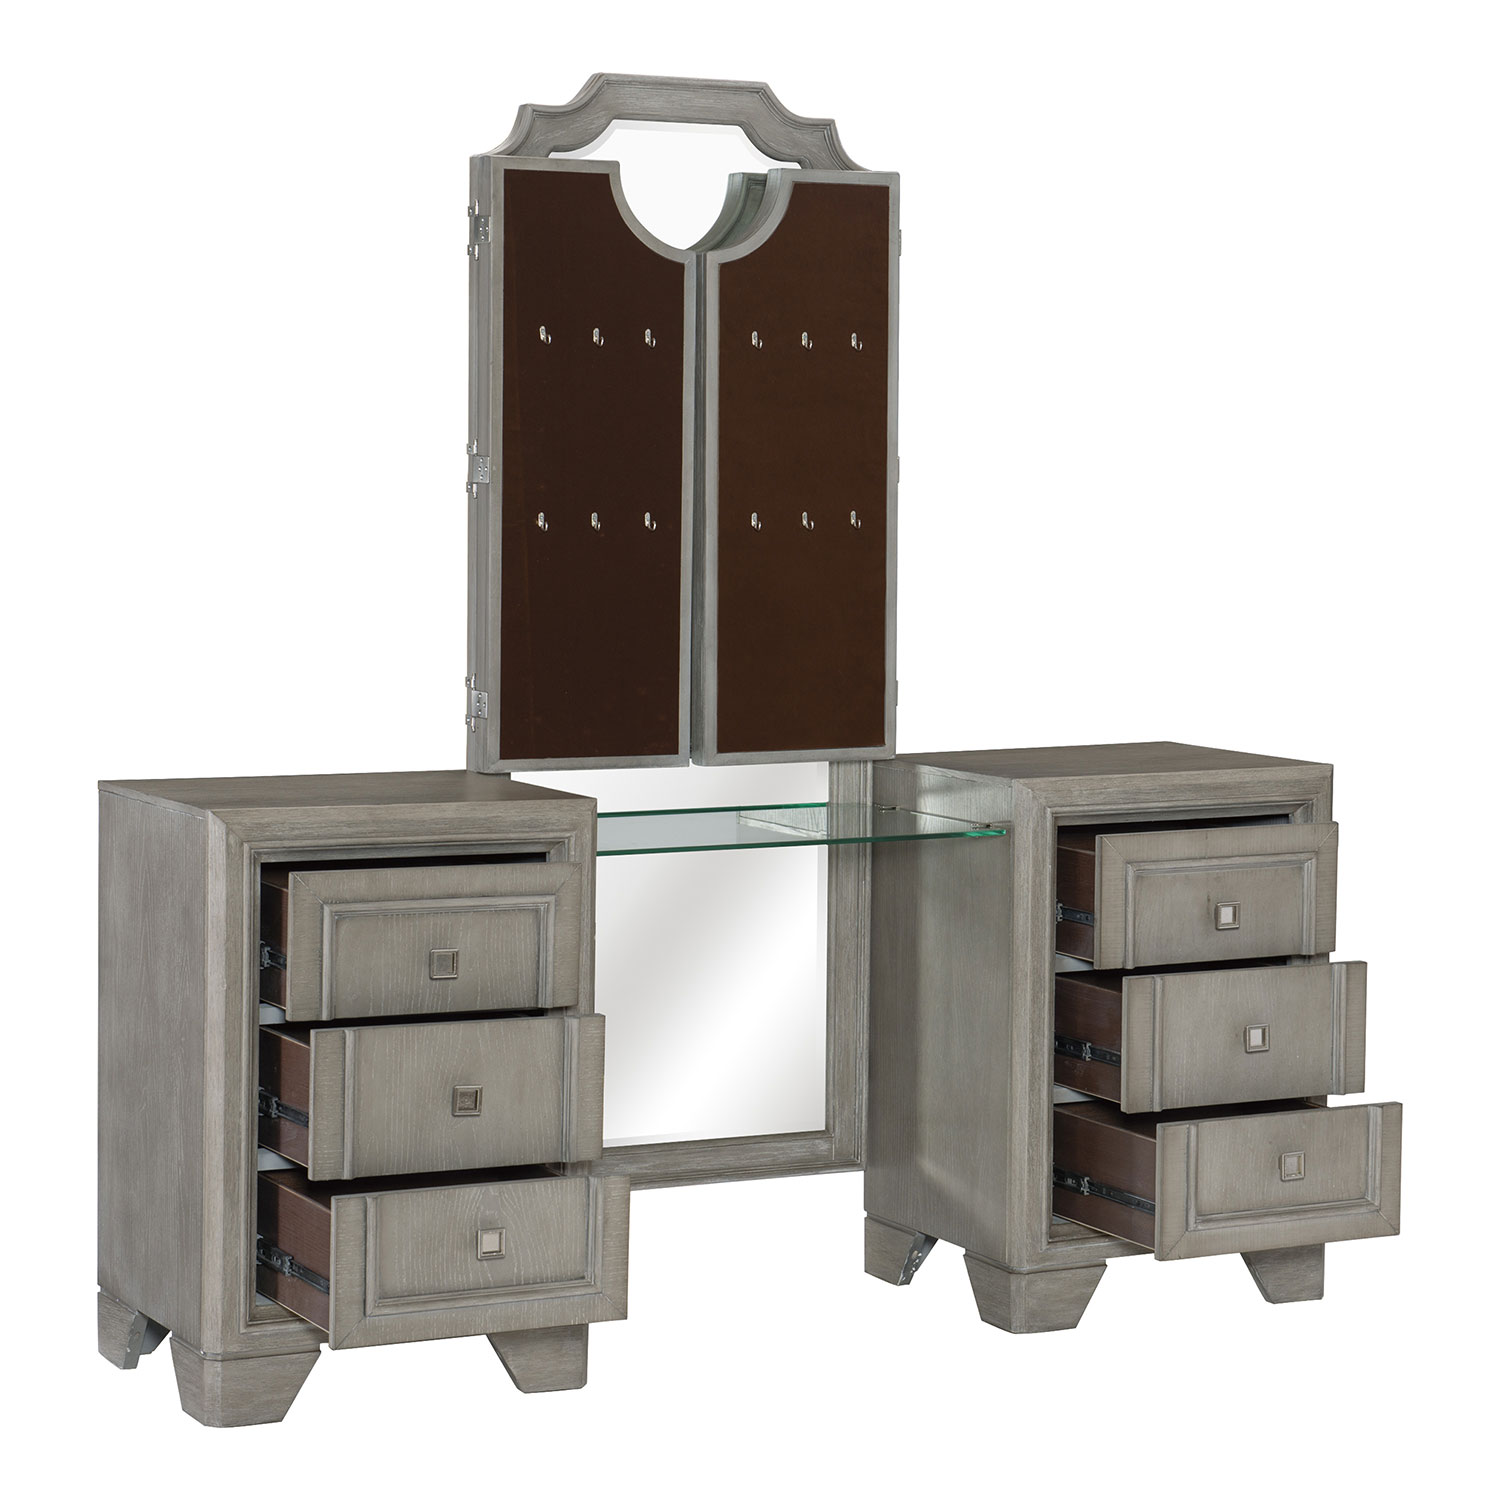 Homelegance Colchester Vanity Dresser with Mirror - Driftwood Gray